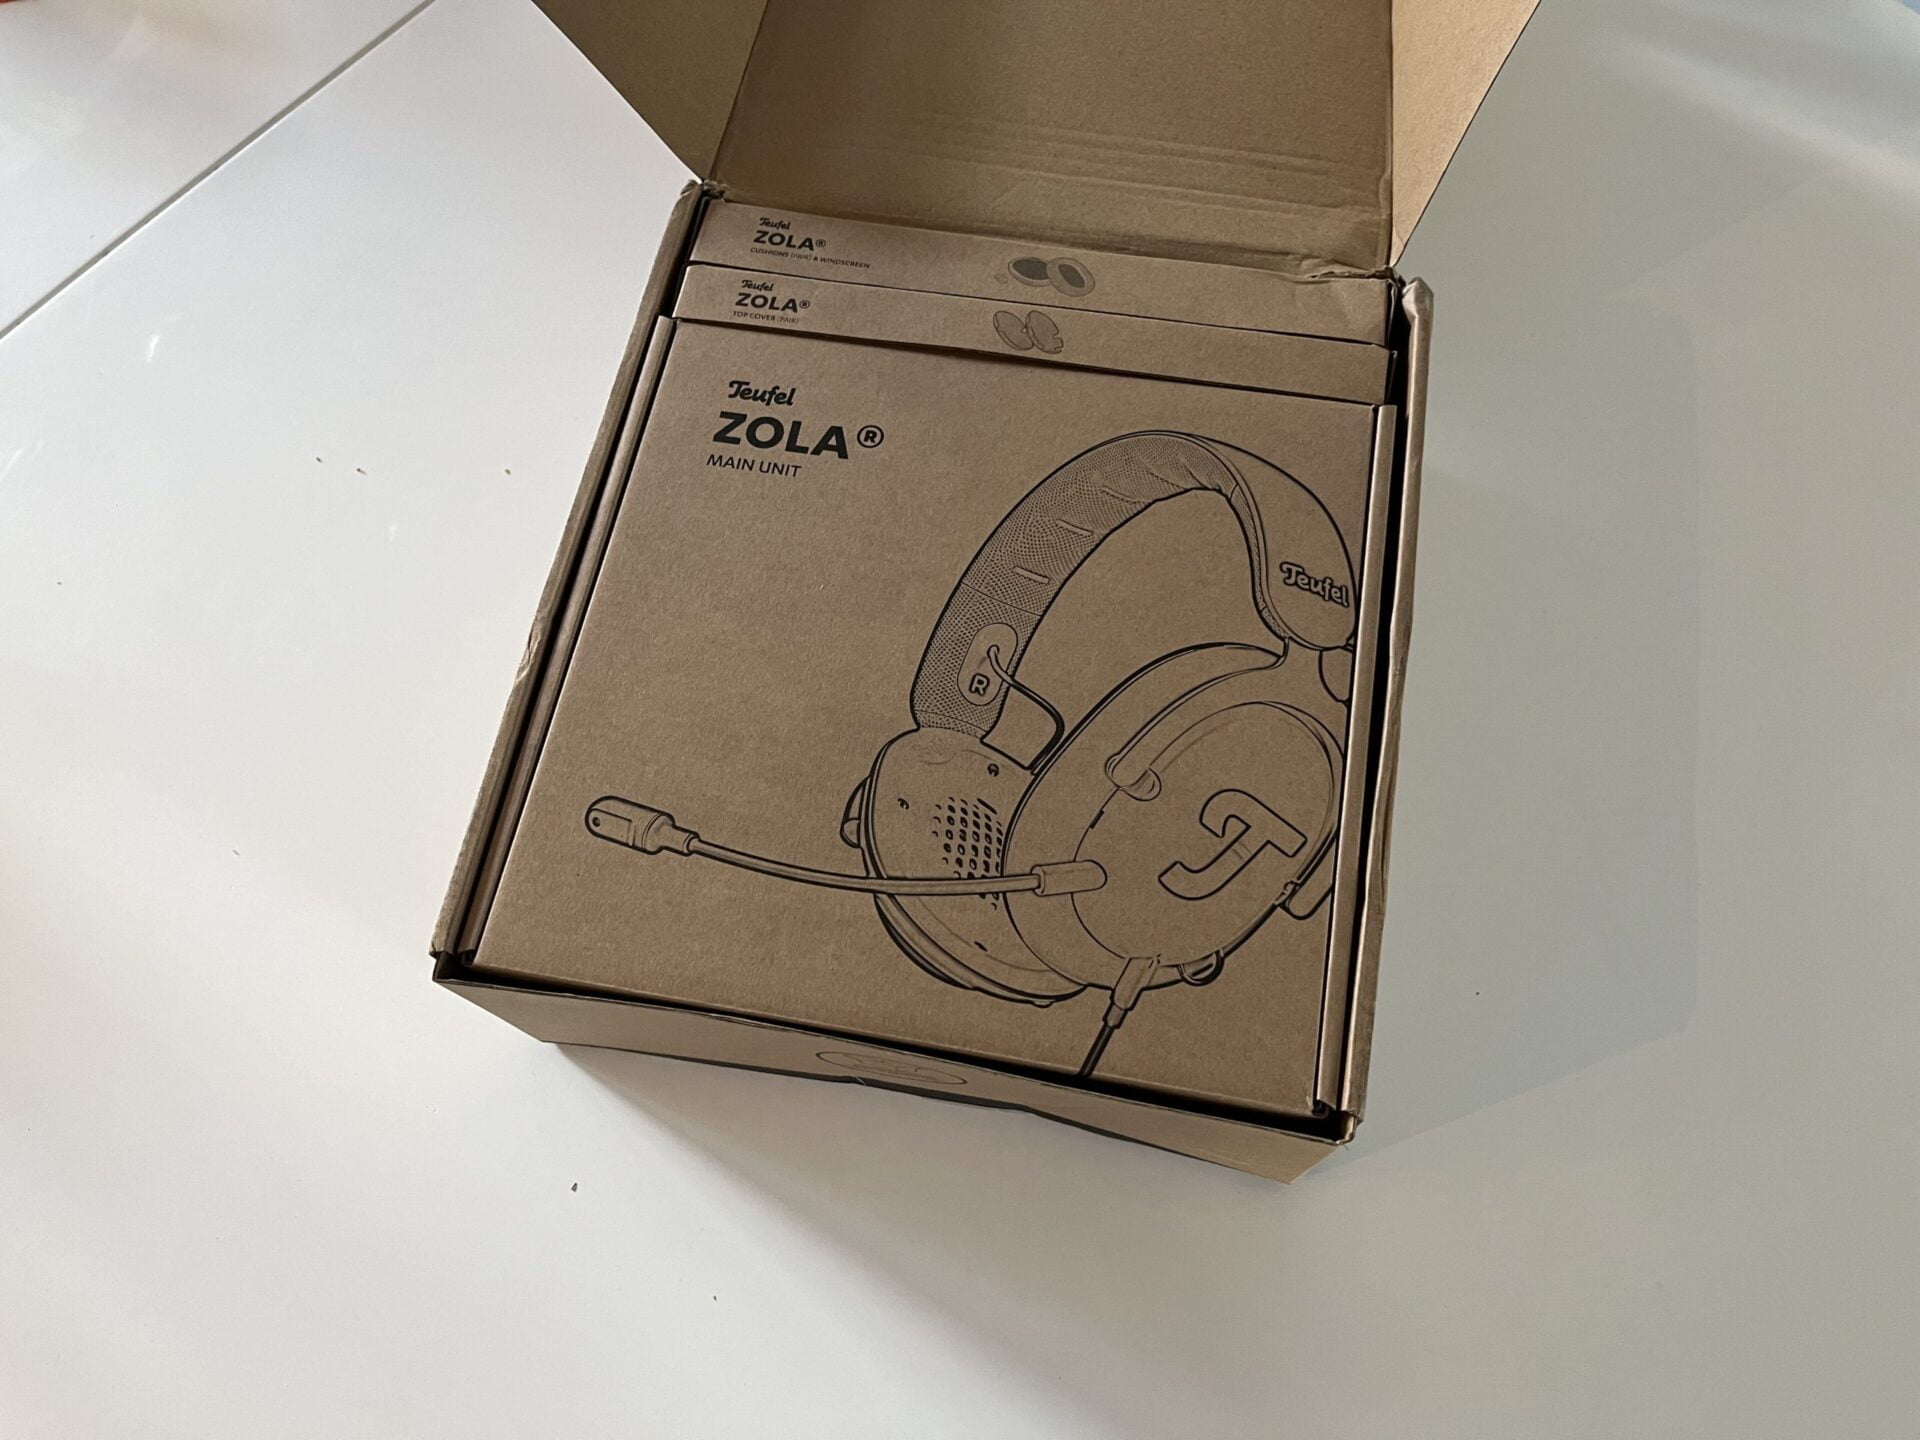 Teufel Zola review - lekkere gaming headphone 3